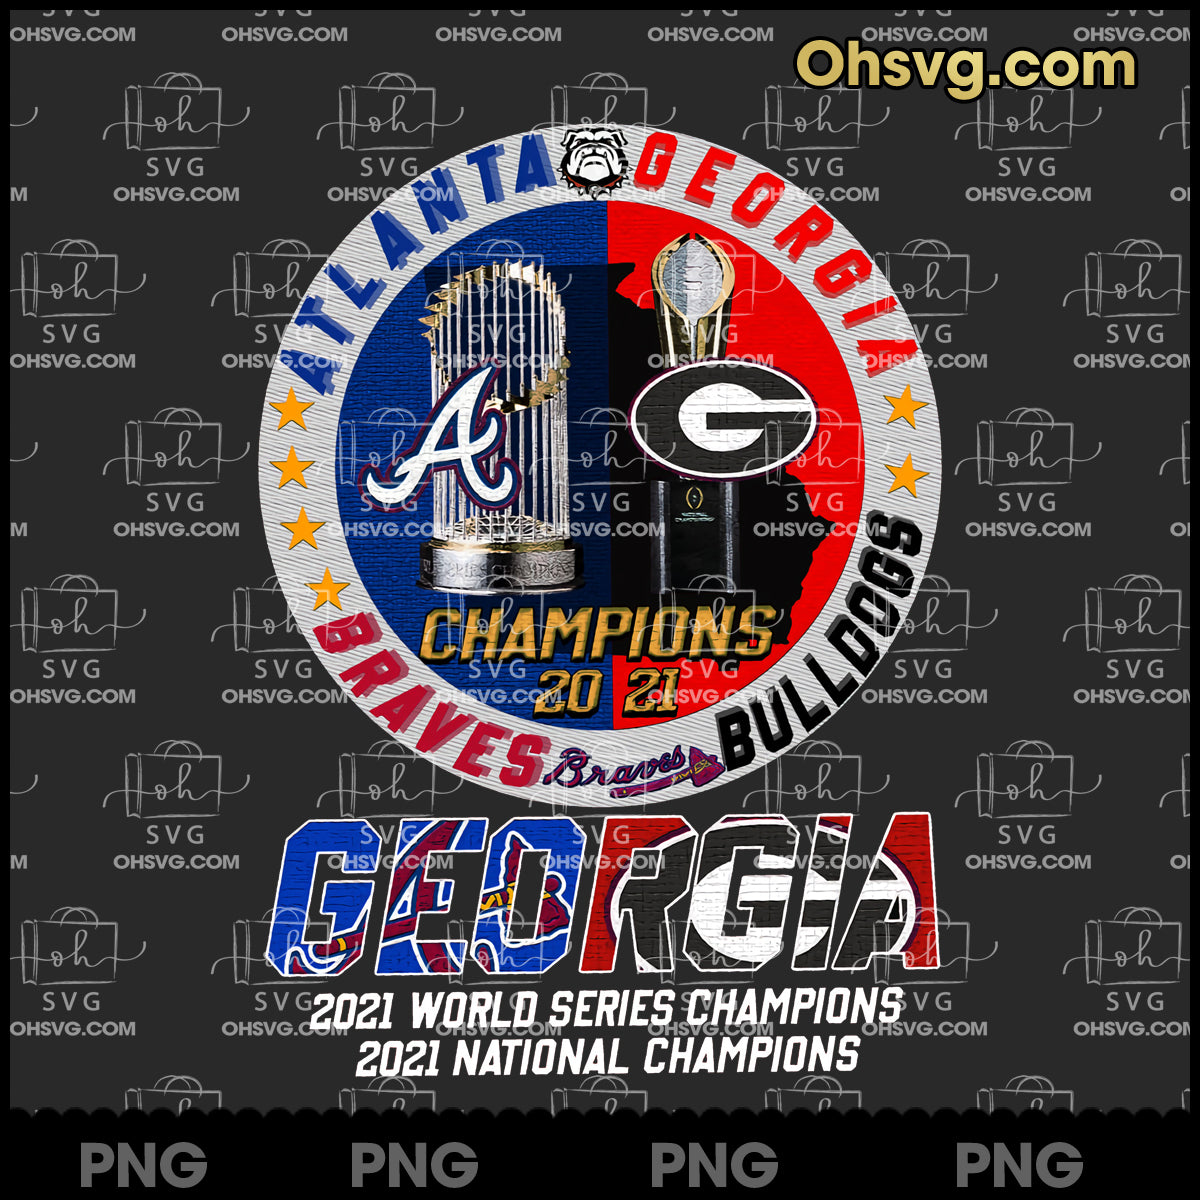 UGA Georgia Bulldogs Braves National Champion 2023 T-Shirt